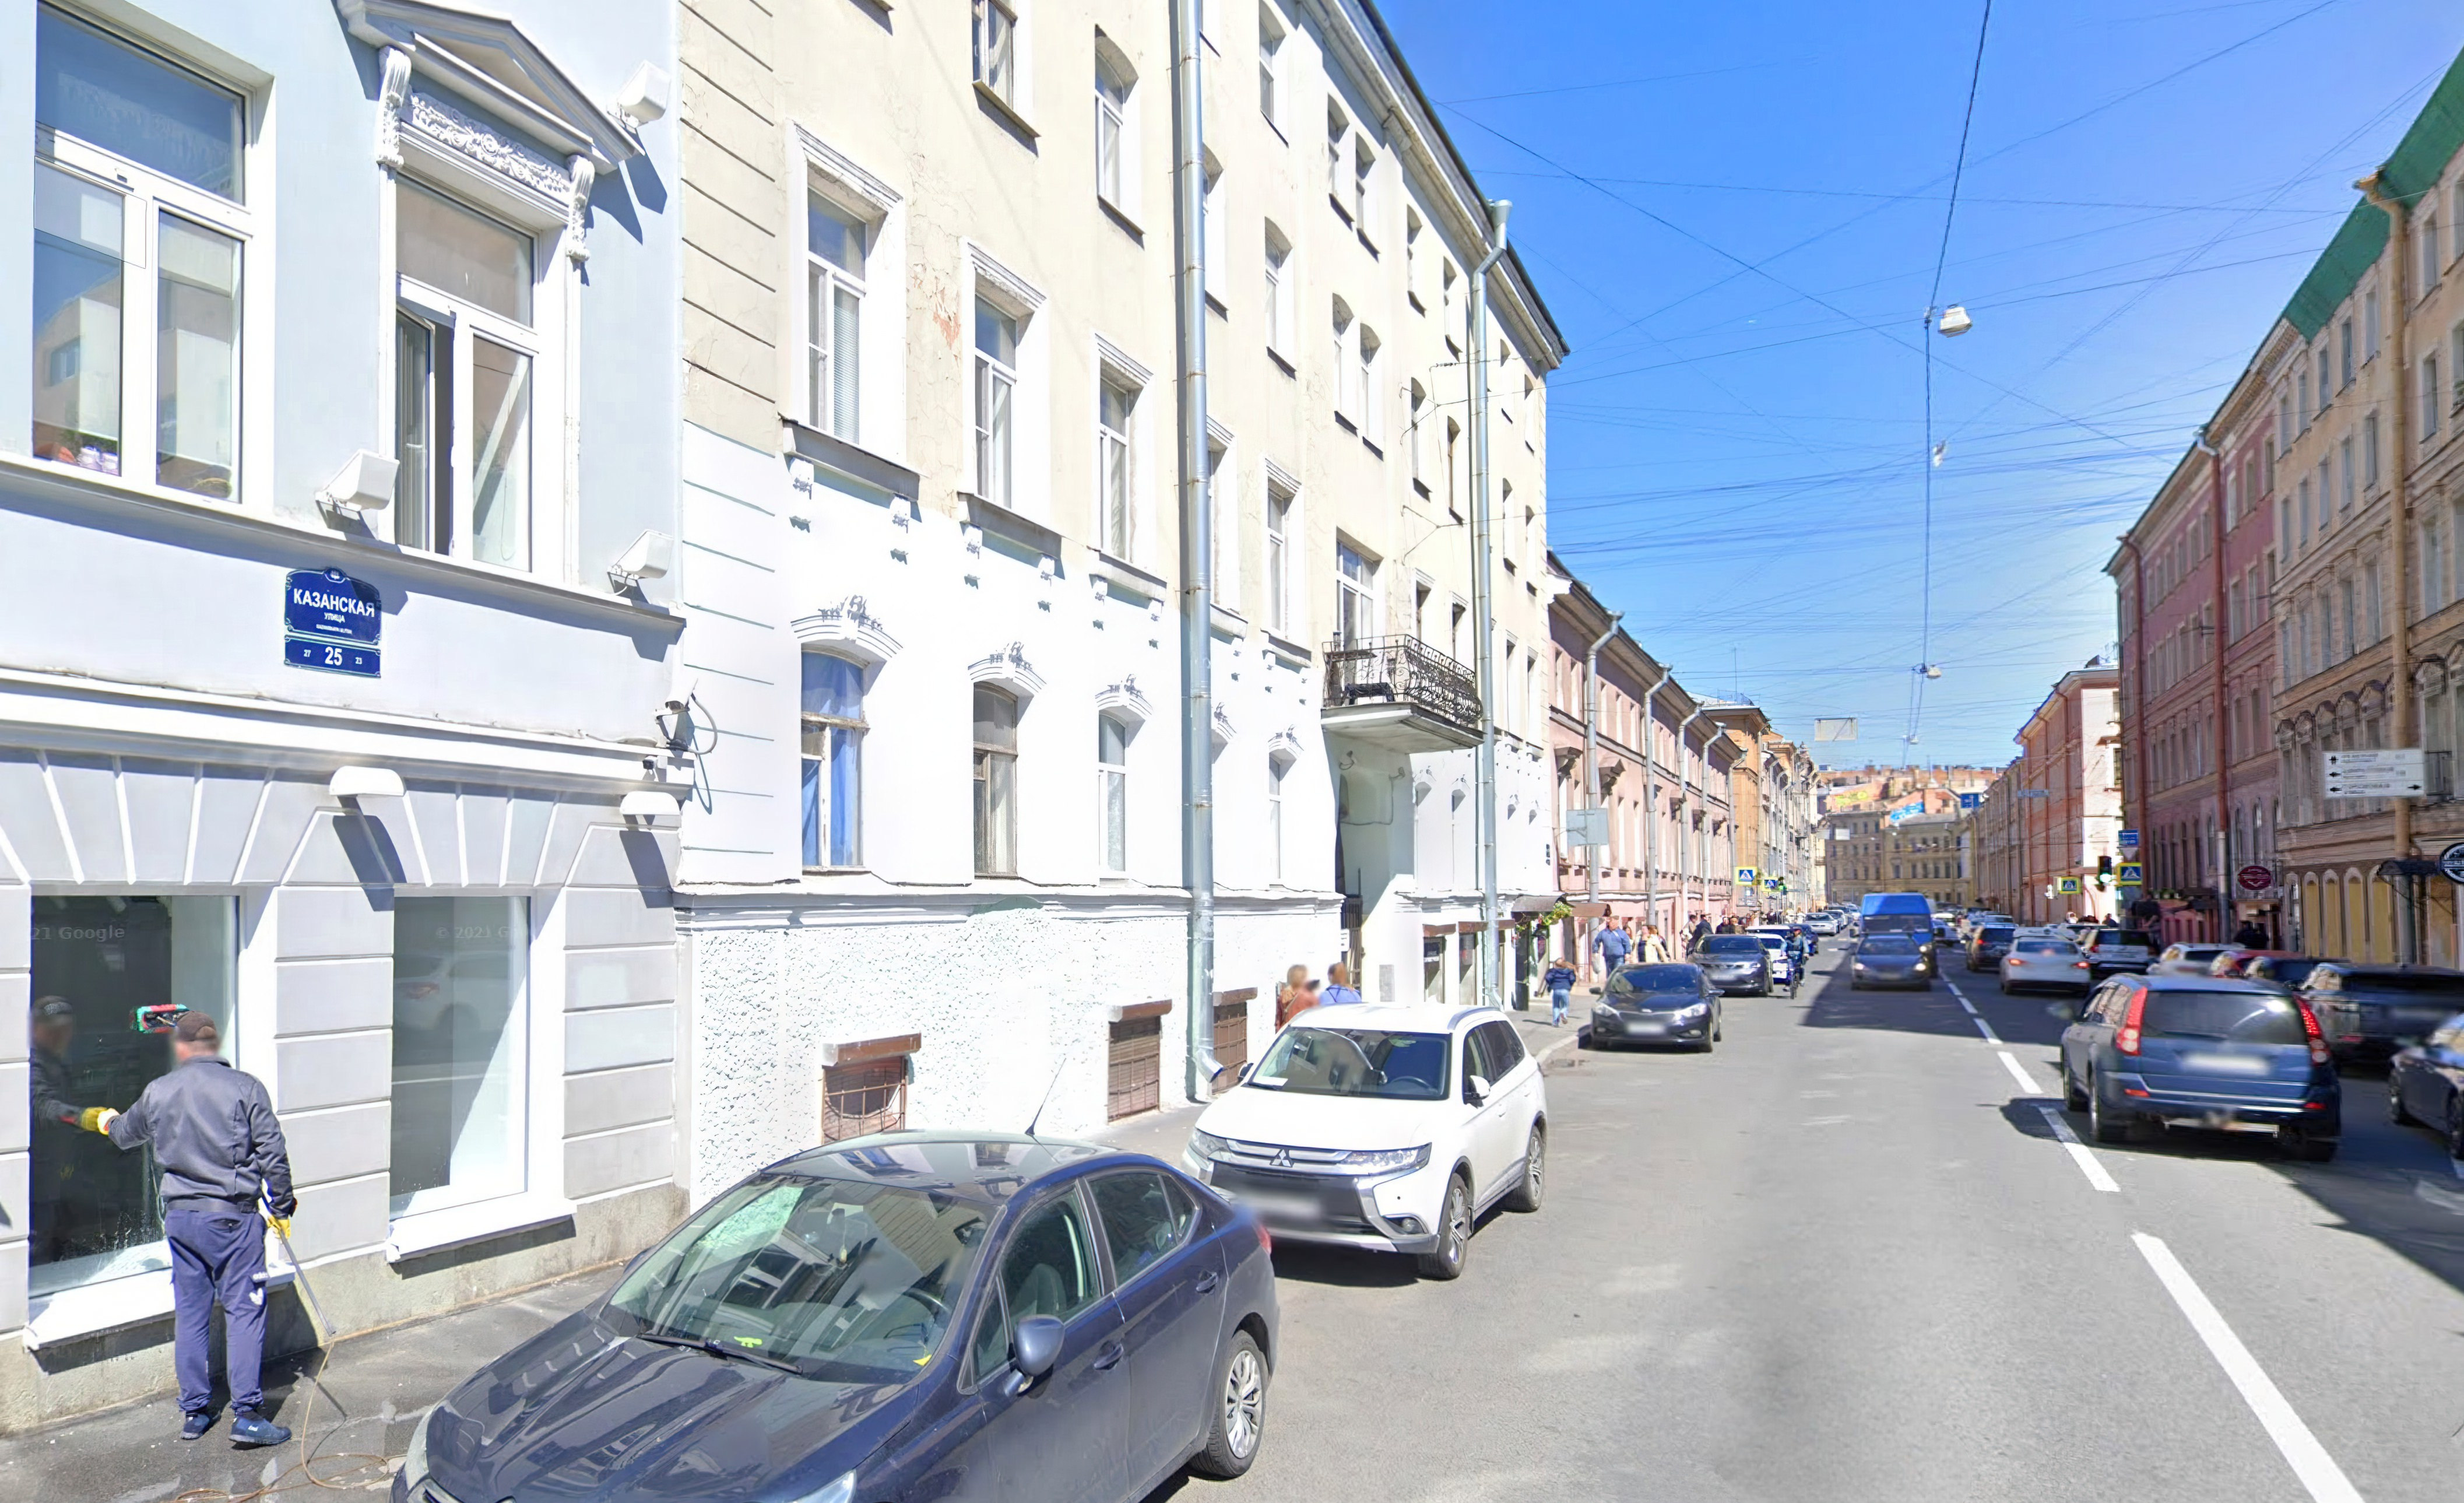 A street view of St Petersburg